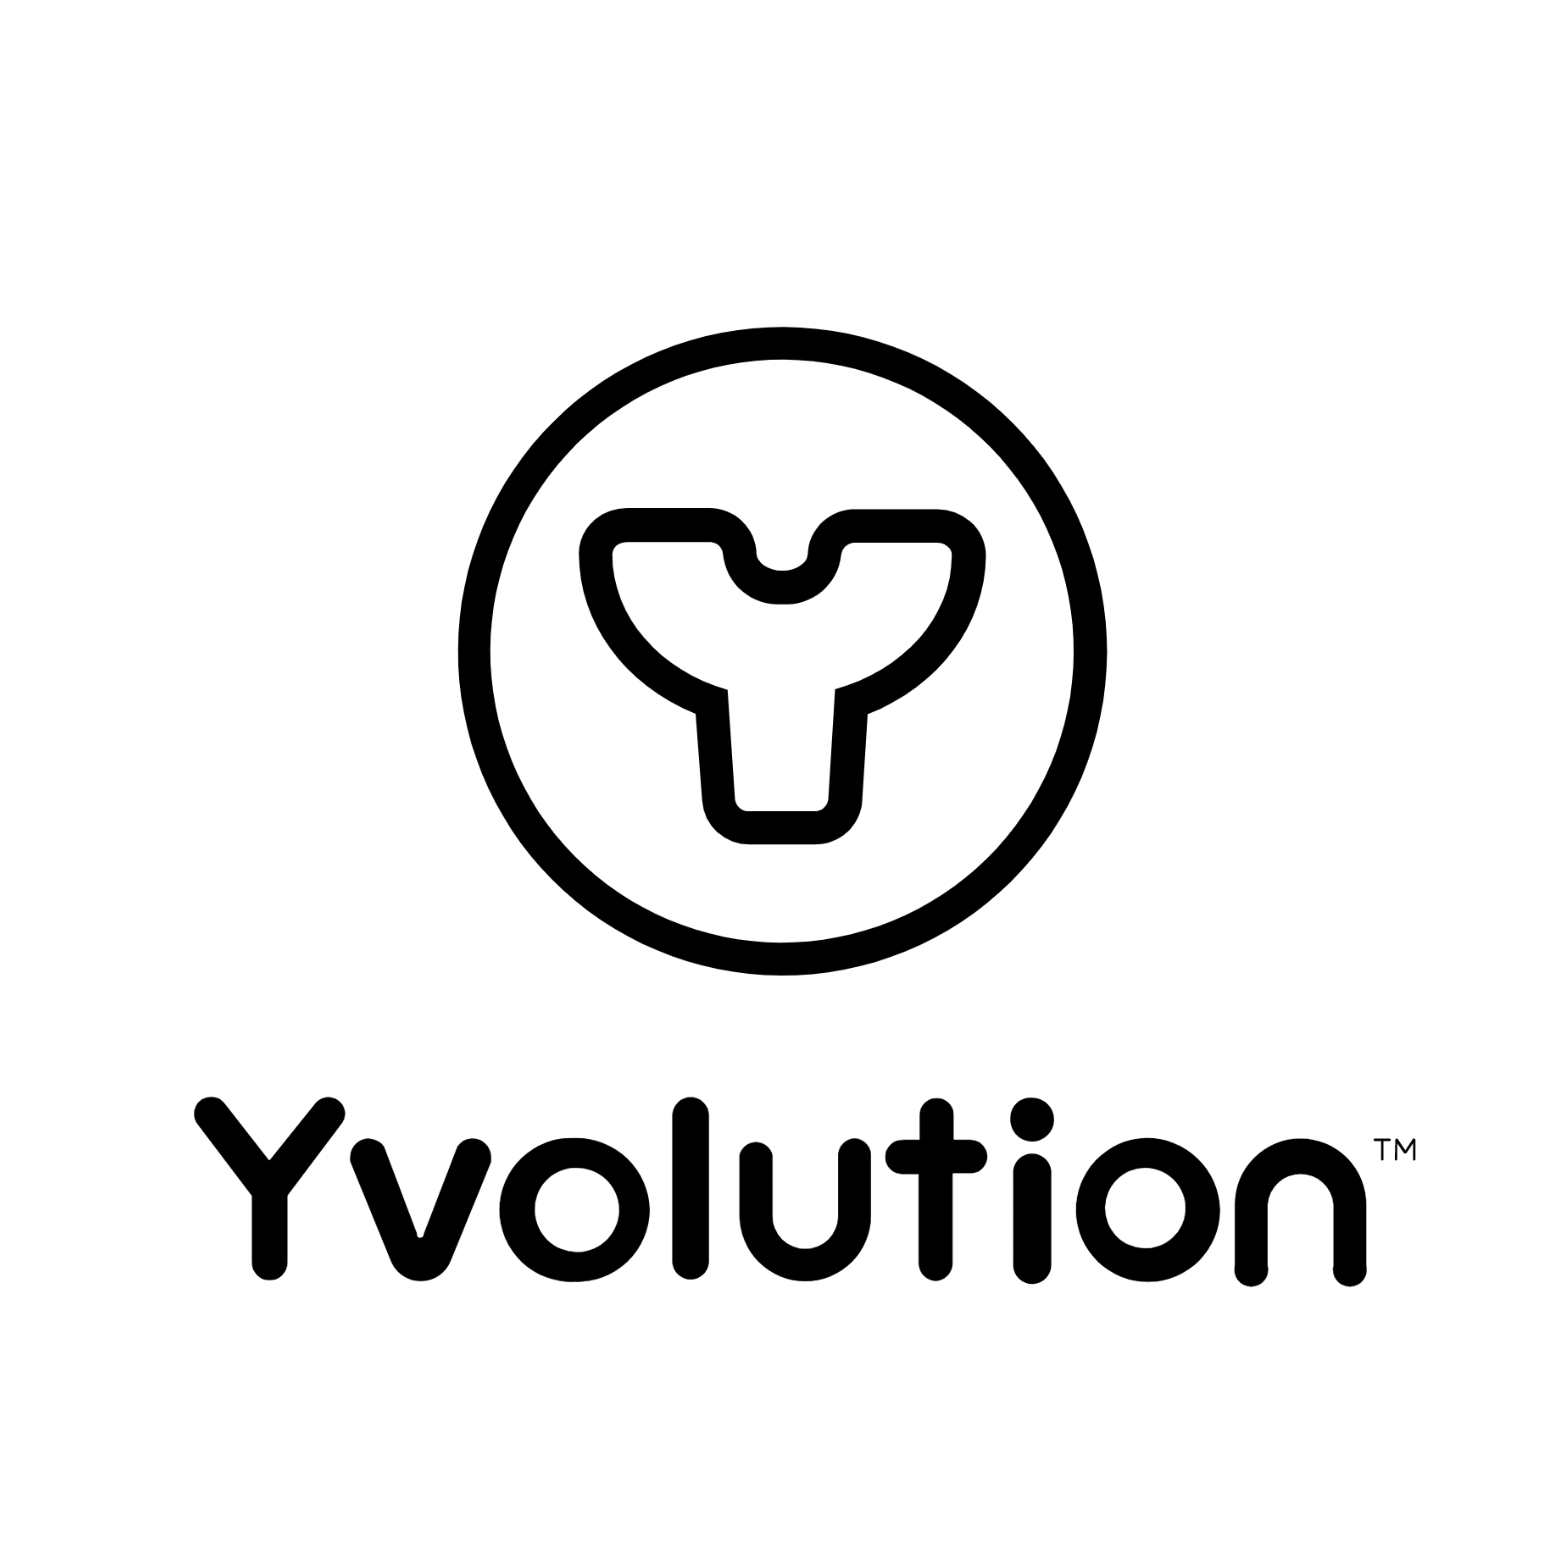 Yvolution